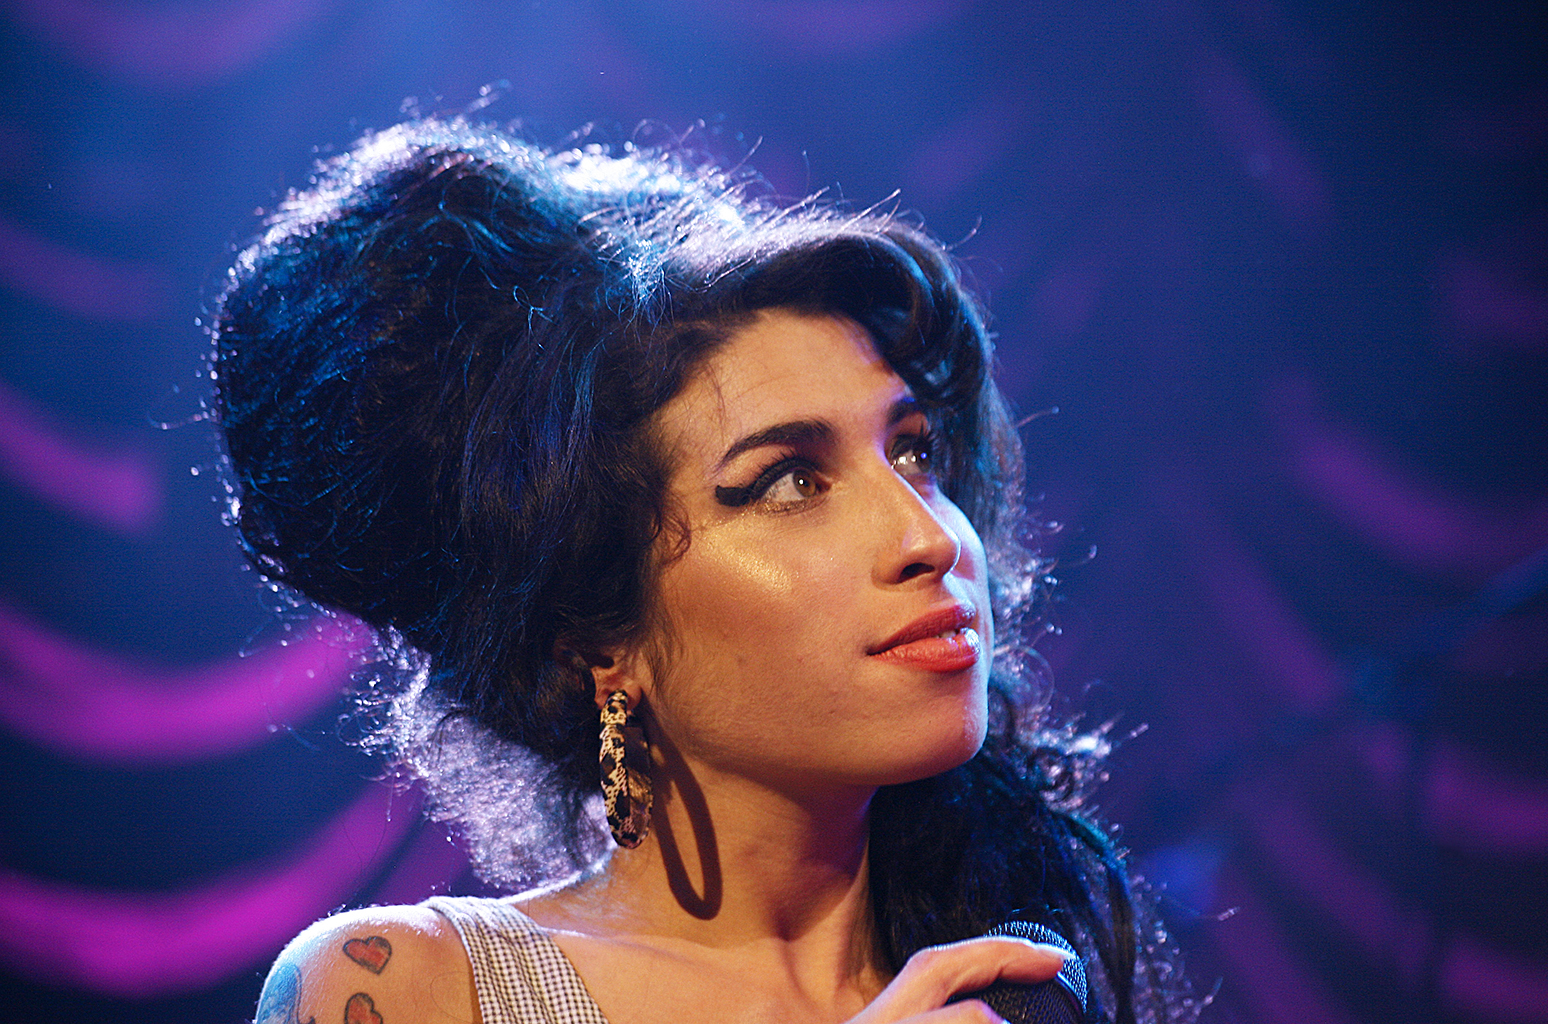 Amy Winehouse's Iconic Outfits, Handwritten Lyrics Headed to Grammy Museum - www.billboard.com - USA